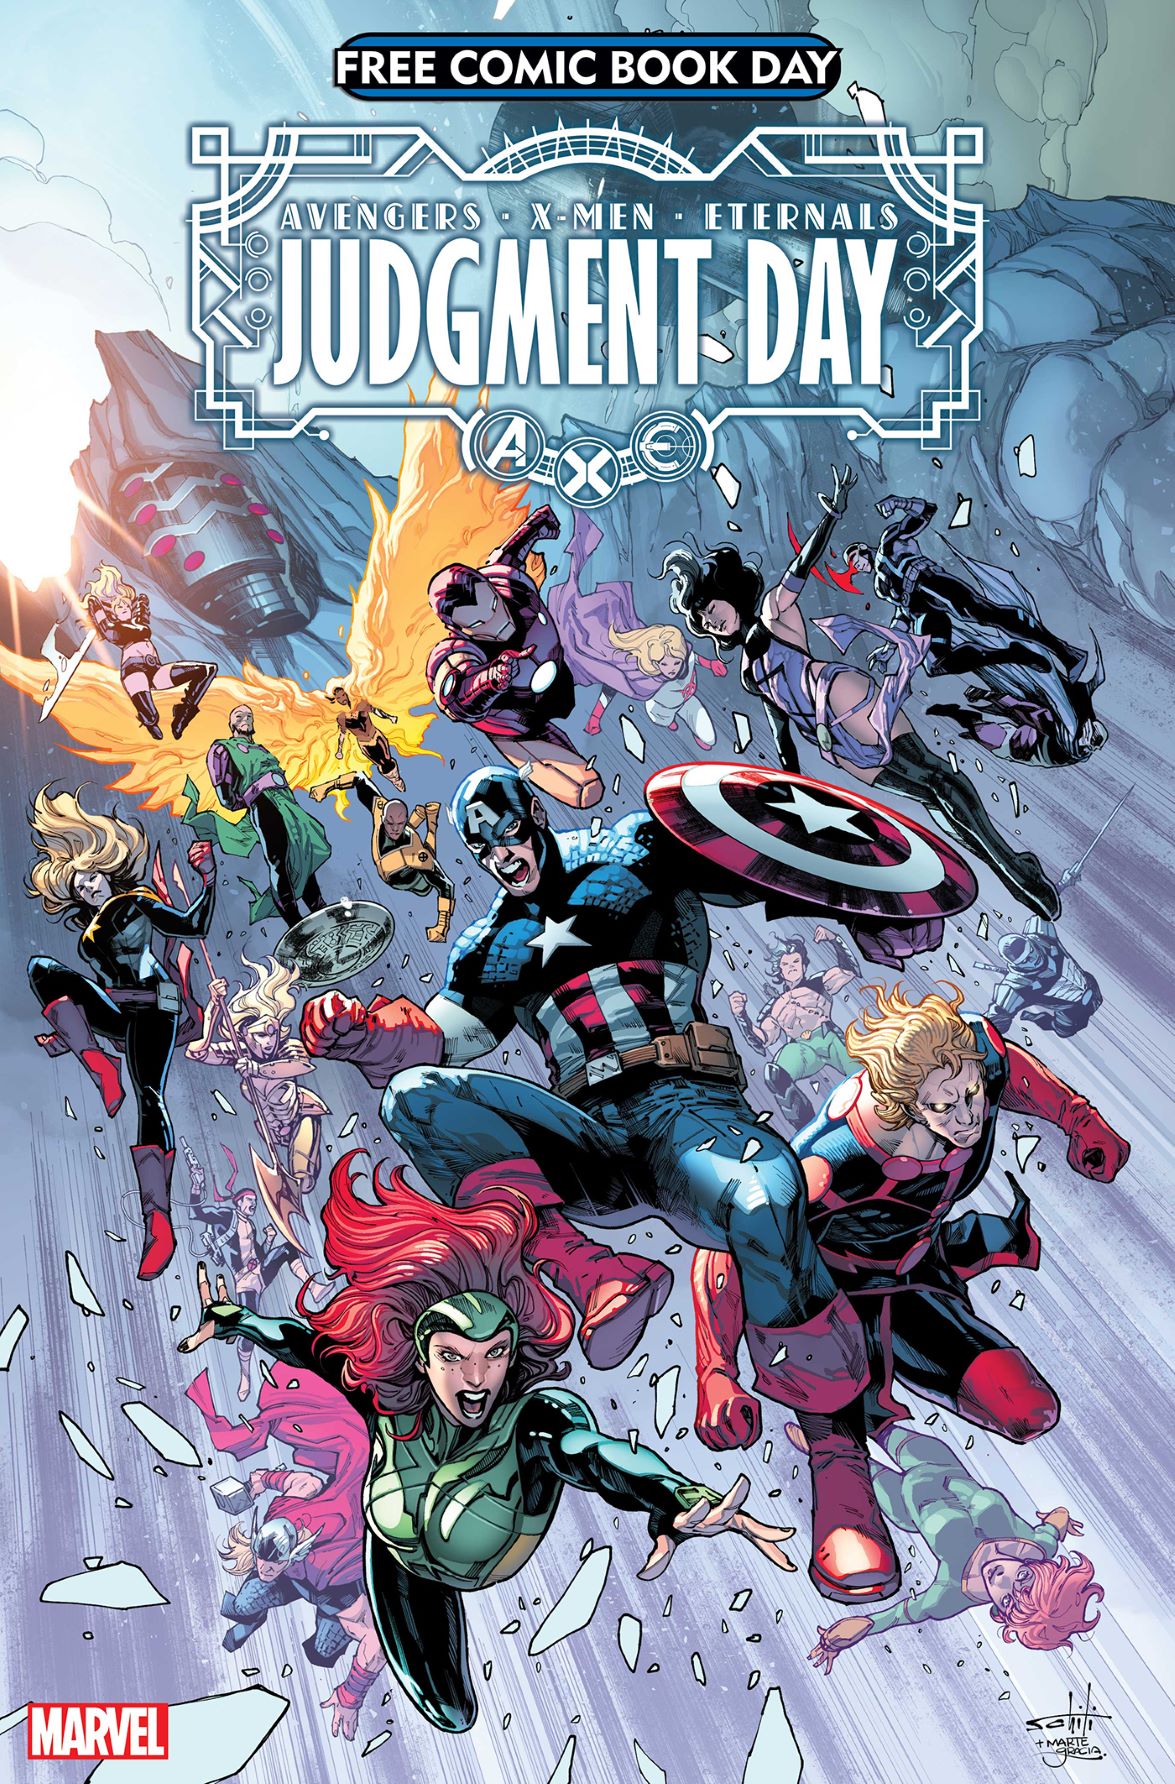 FCBD 2022: Avengers/X-Men Judgment Day #1